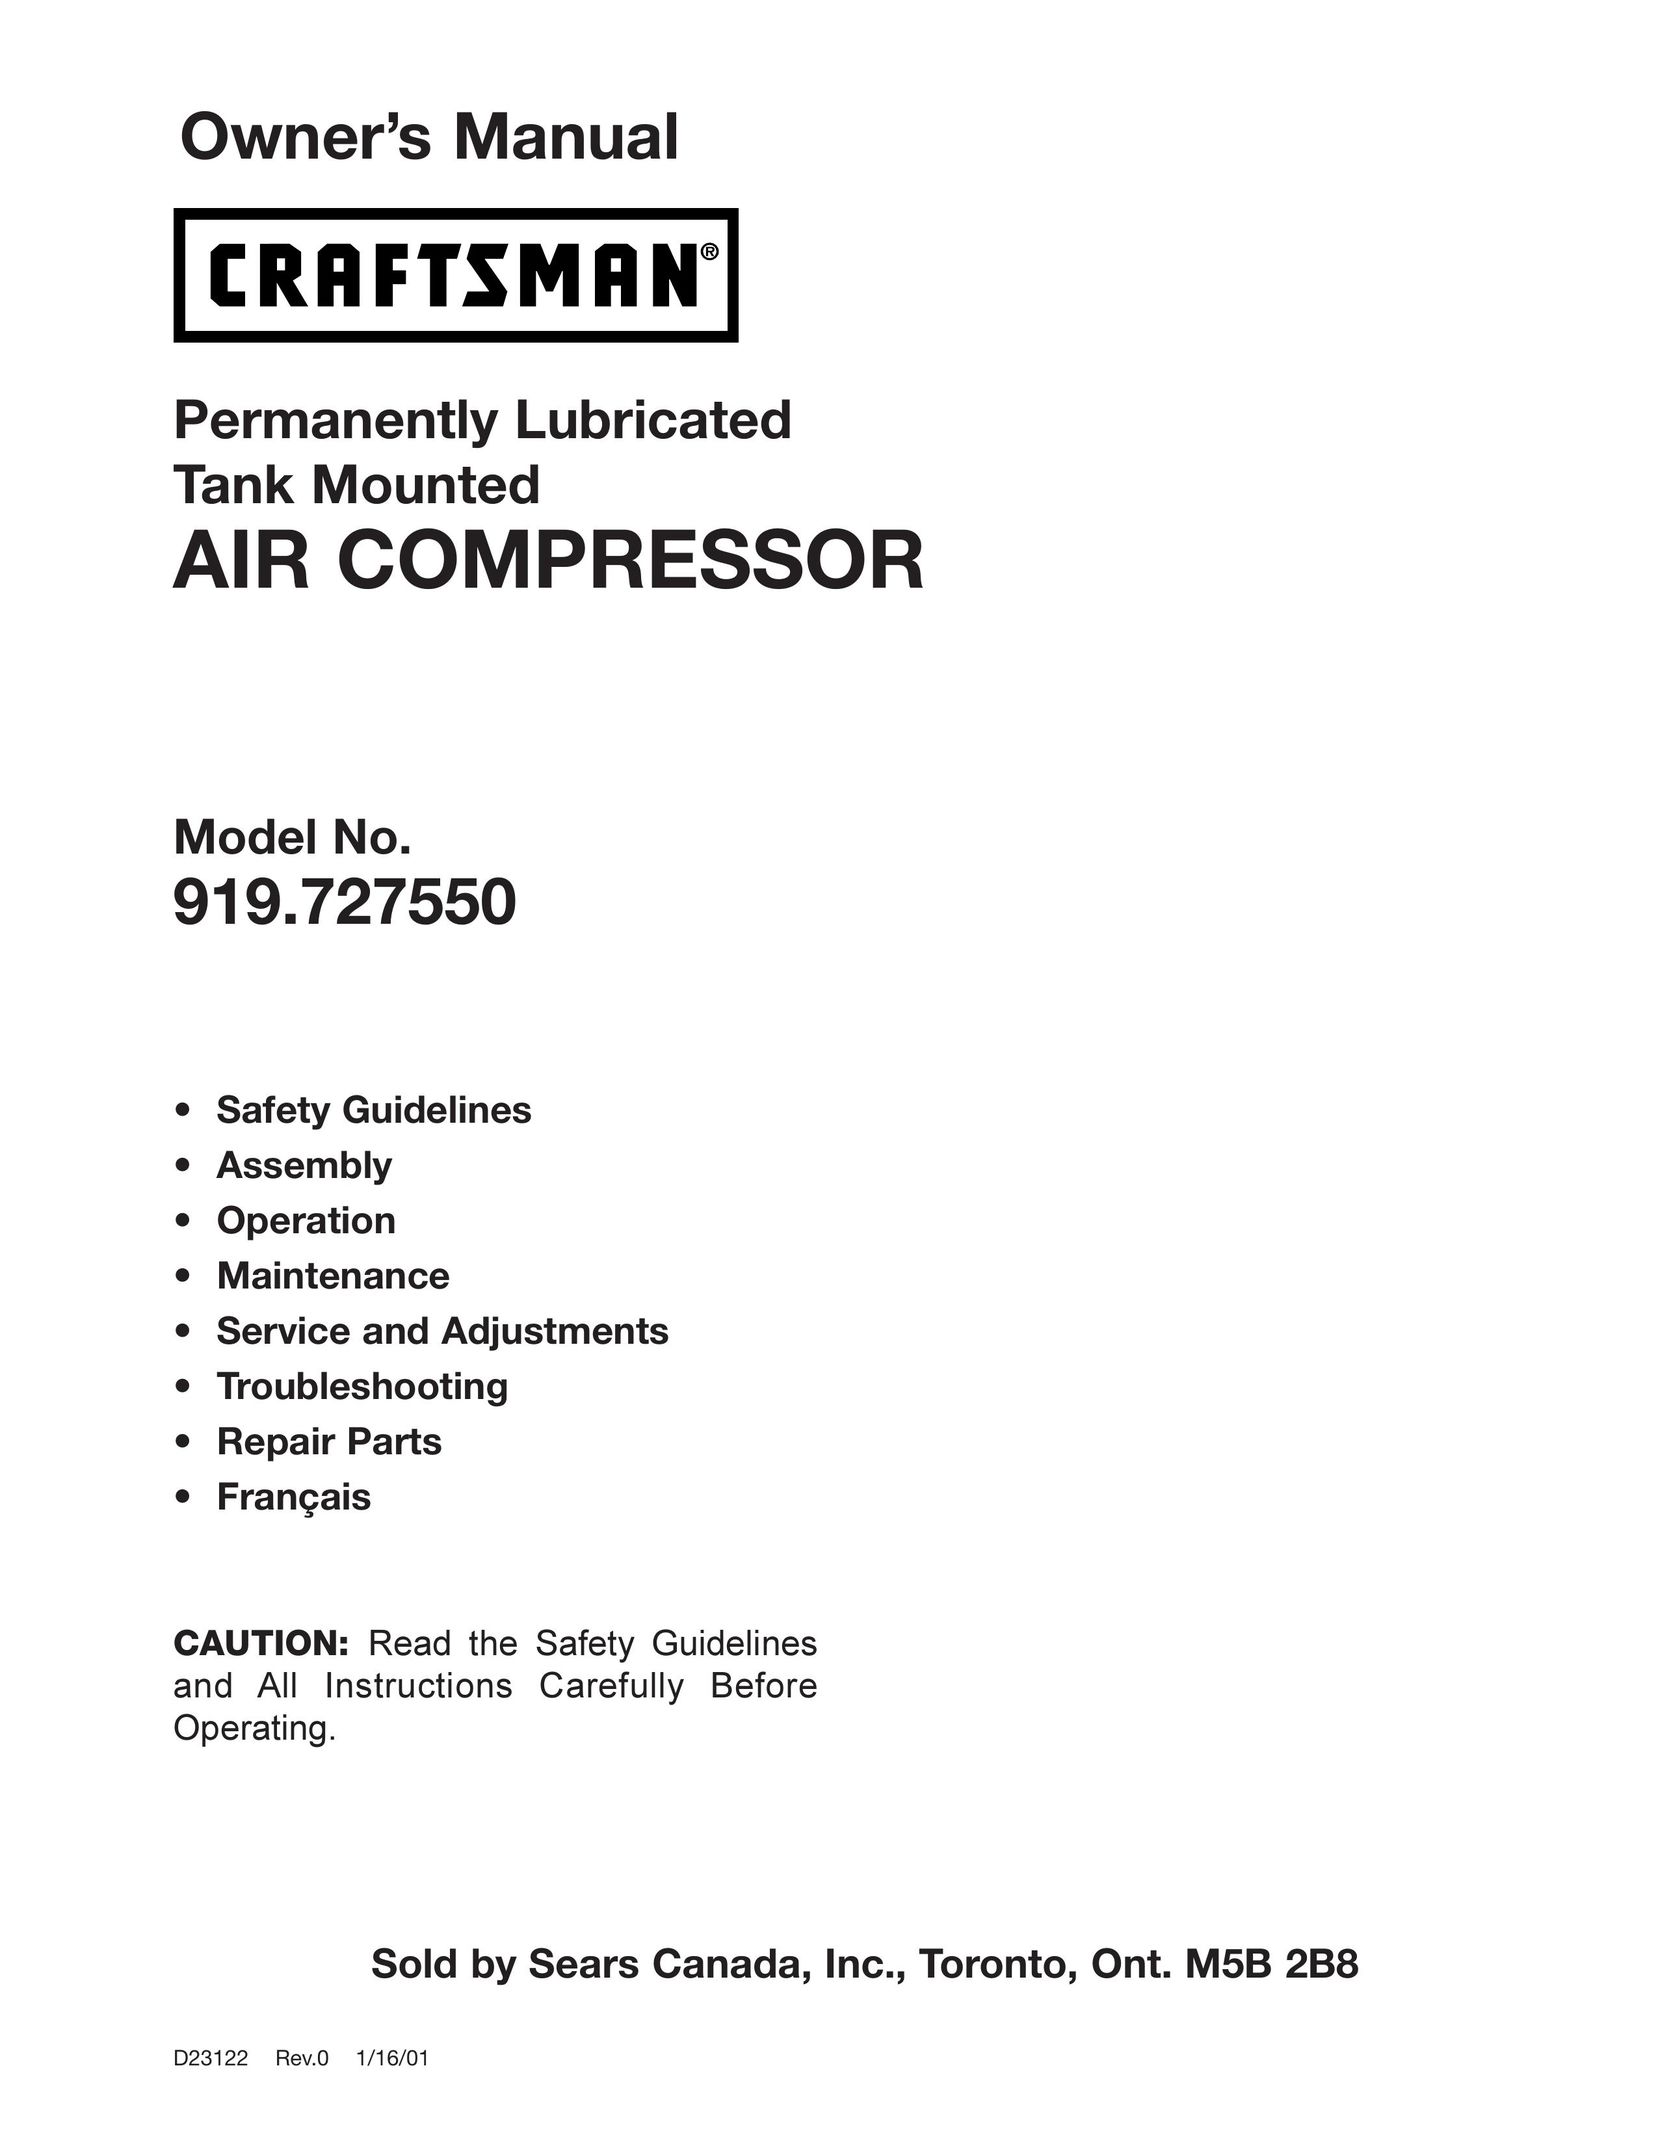 Craftsman 919.72755 Air Compressor User Manual